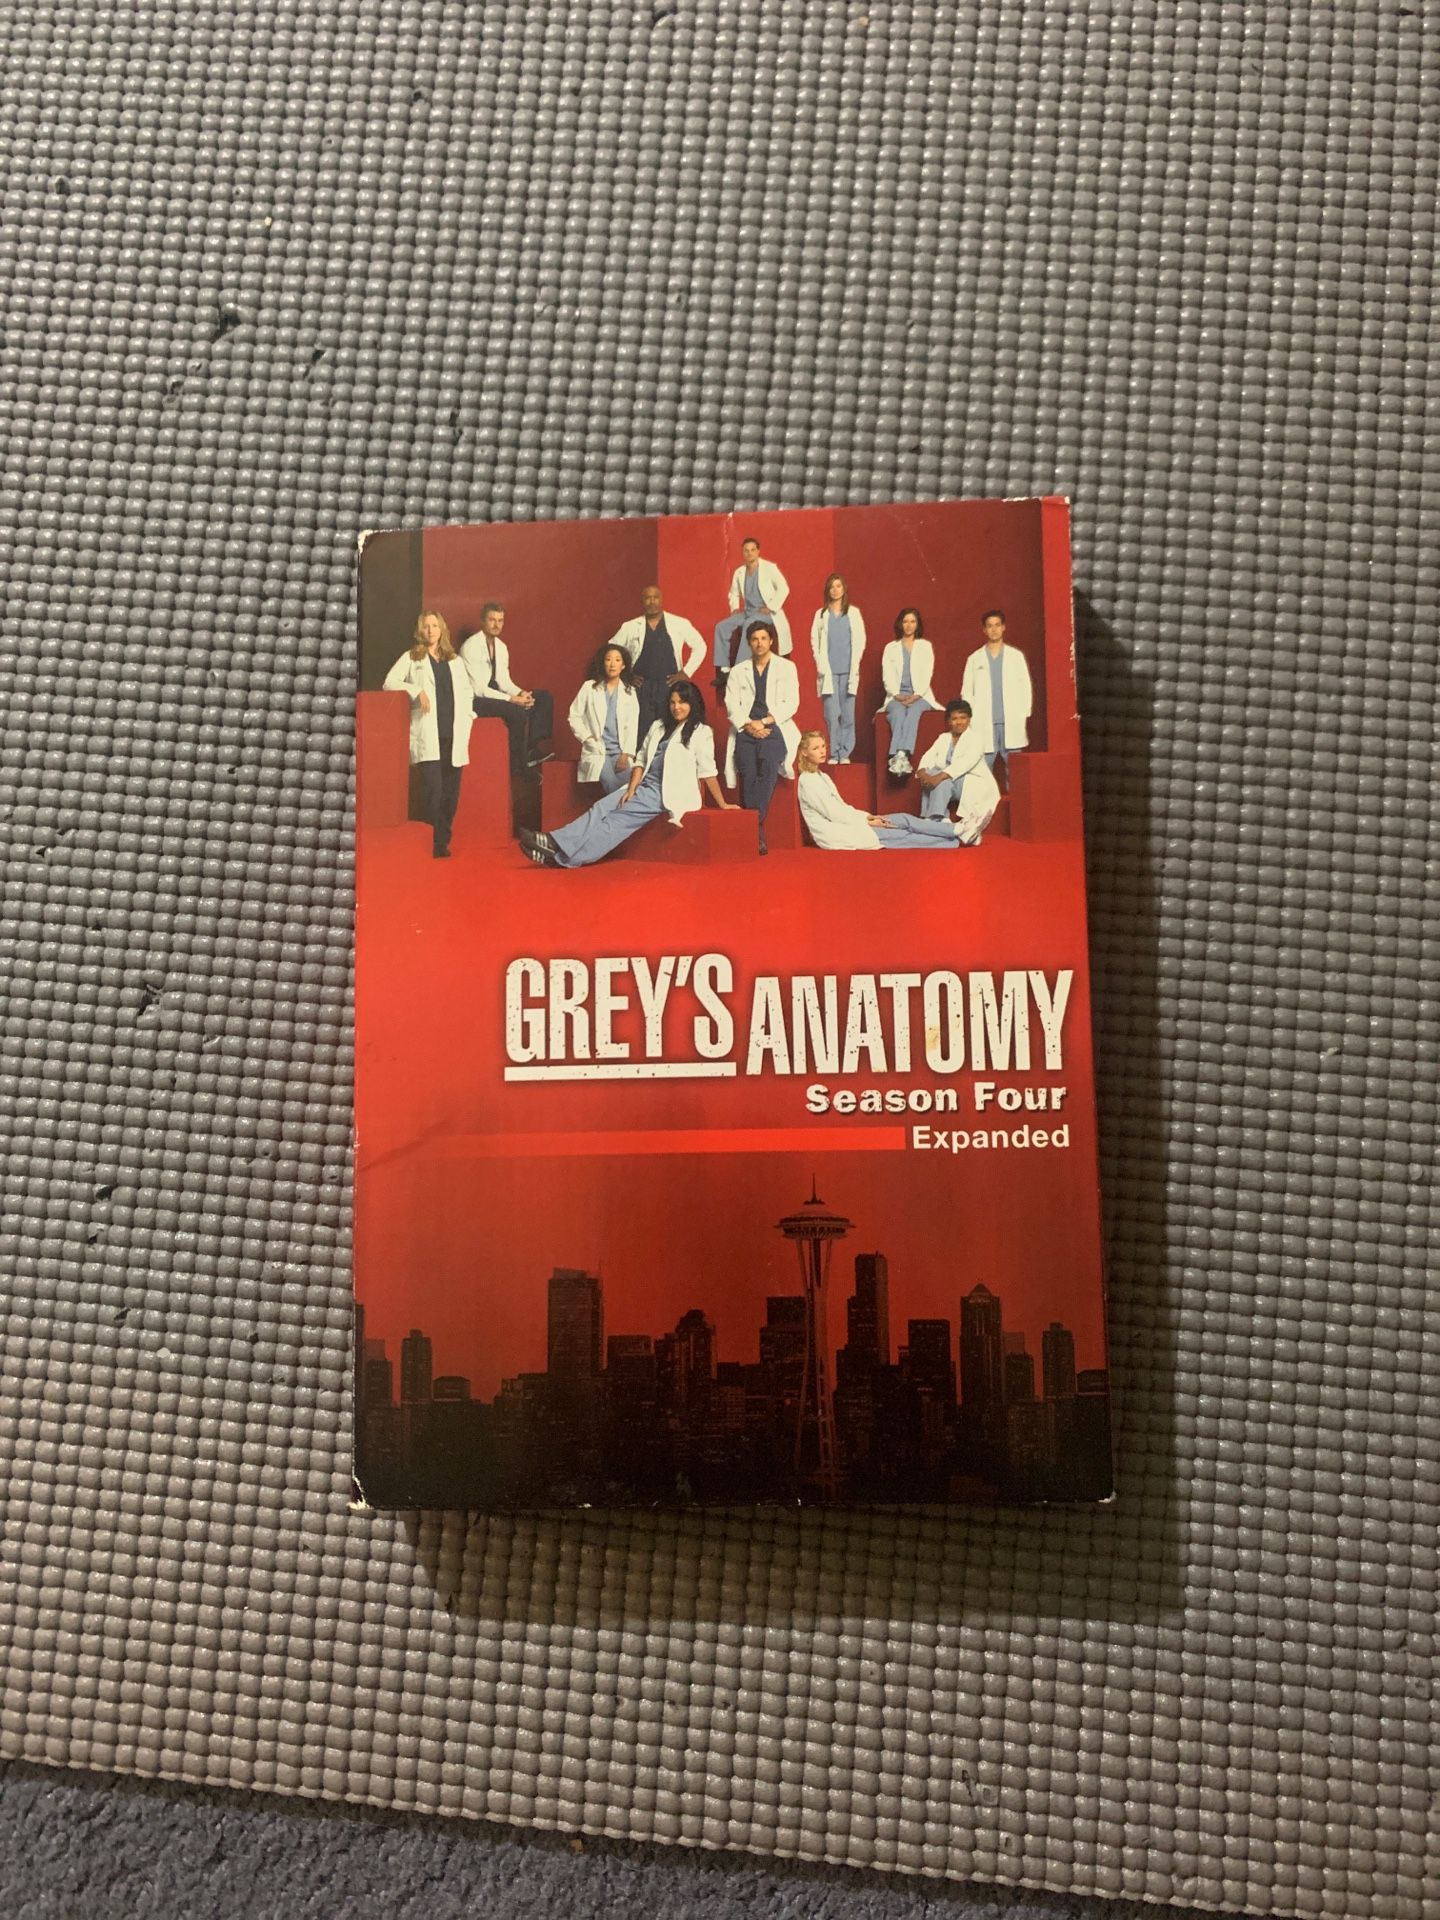 Greys Anatomy season 4 expanded edition DVD